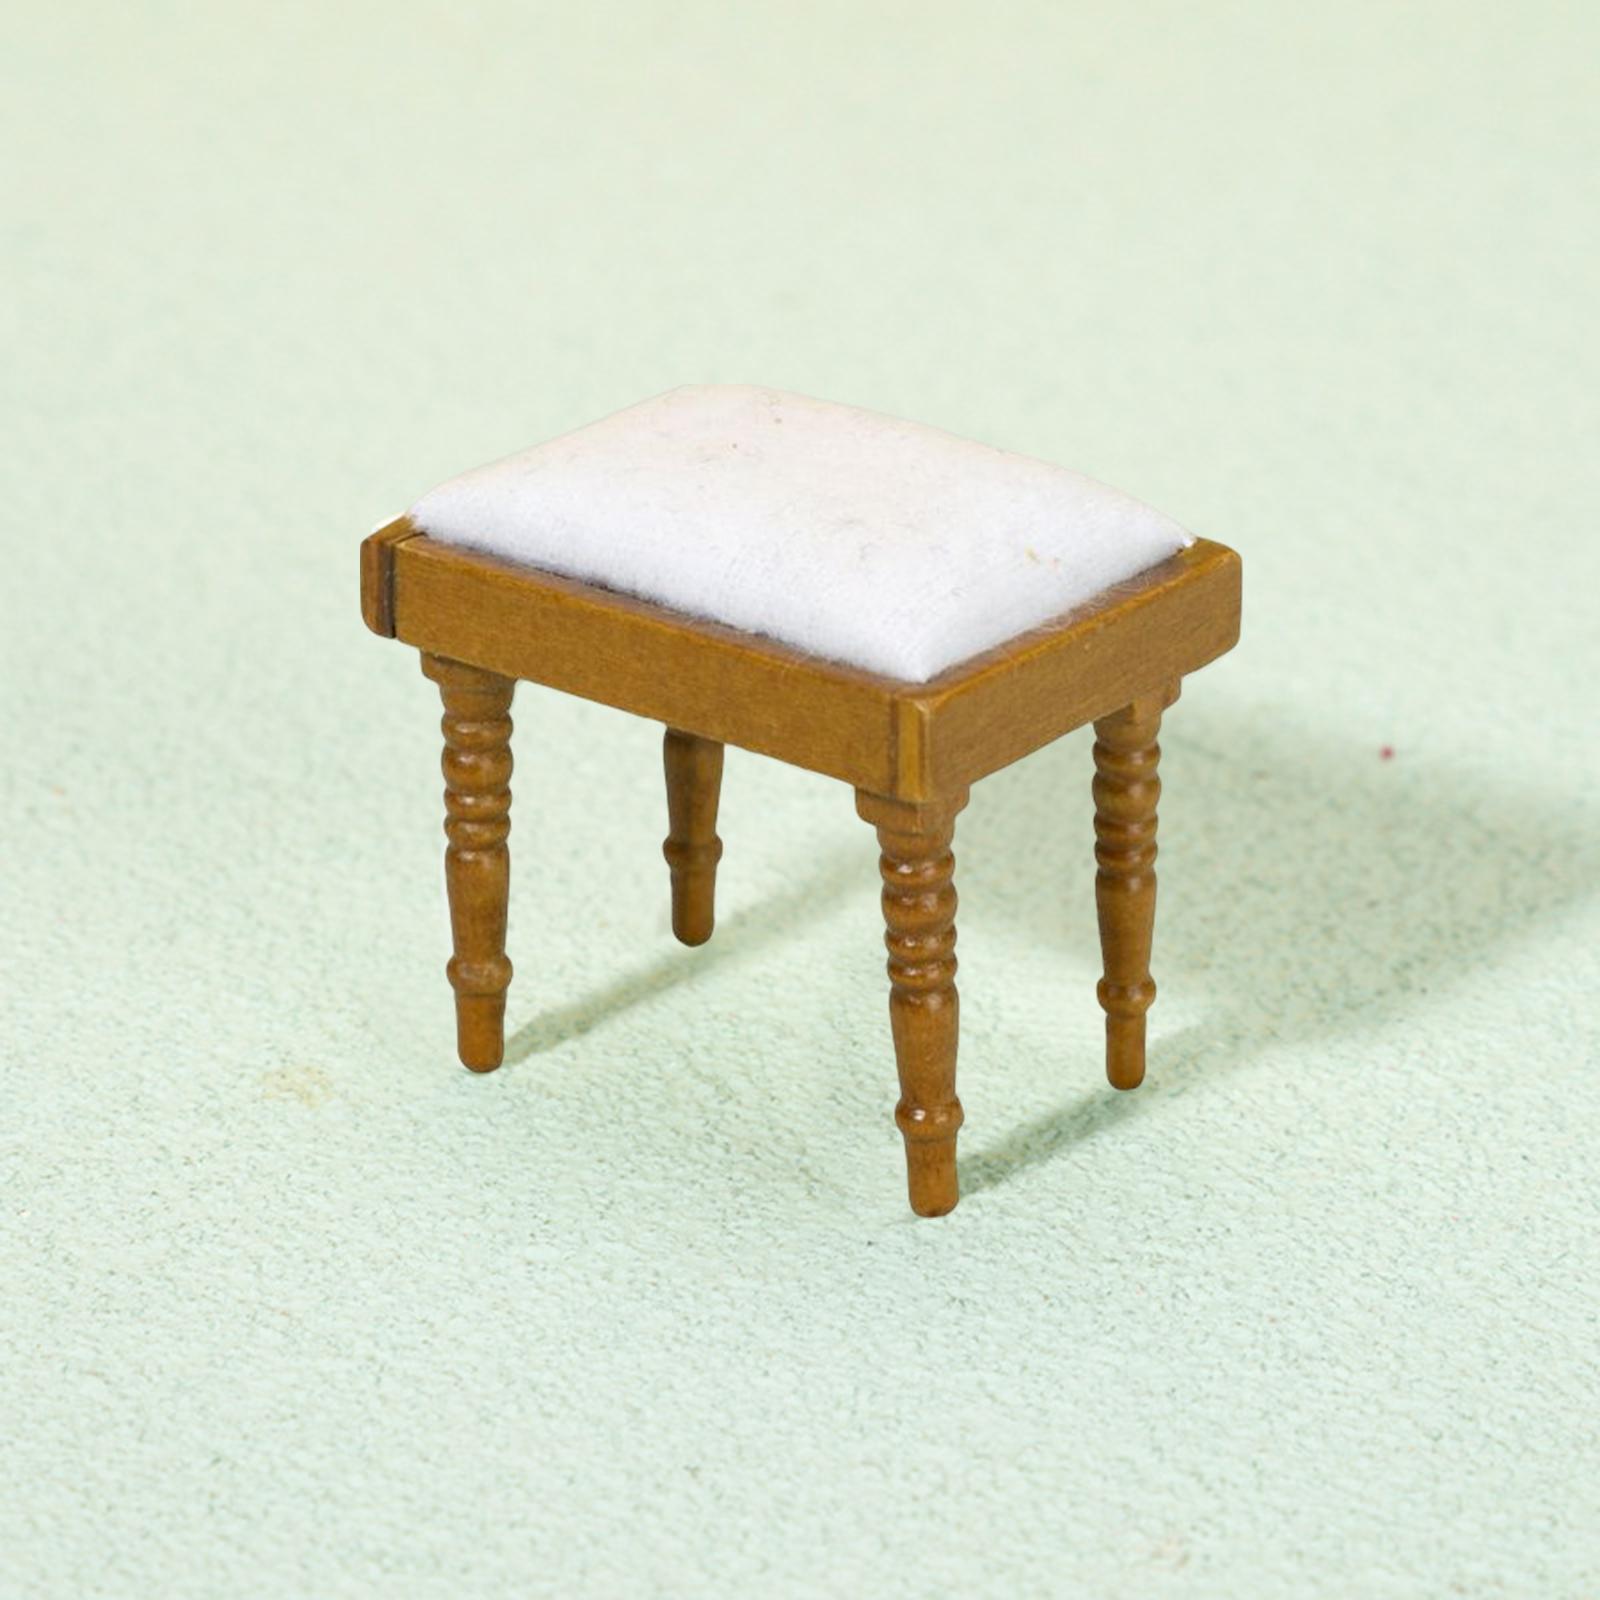 Doll House Chair Miniature Furniture Mini Life Scene for kids